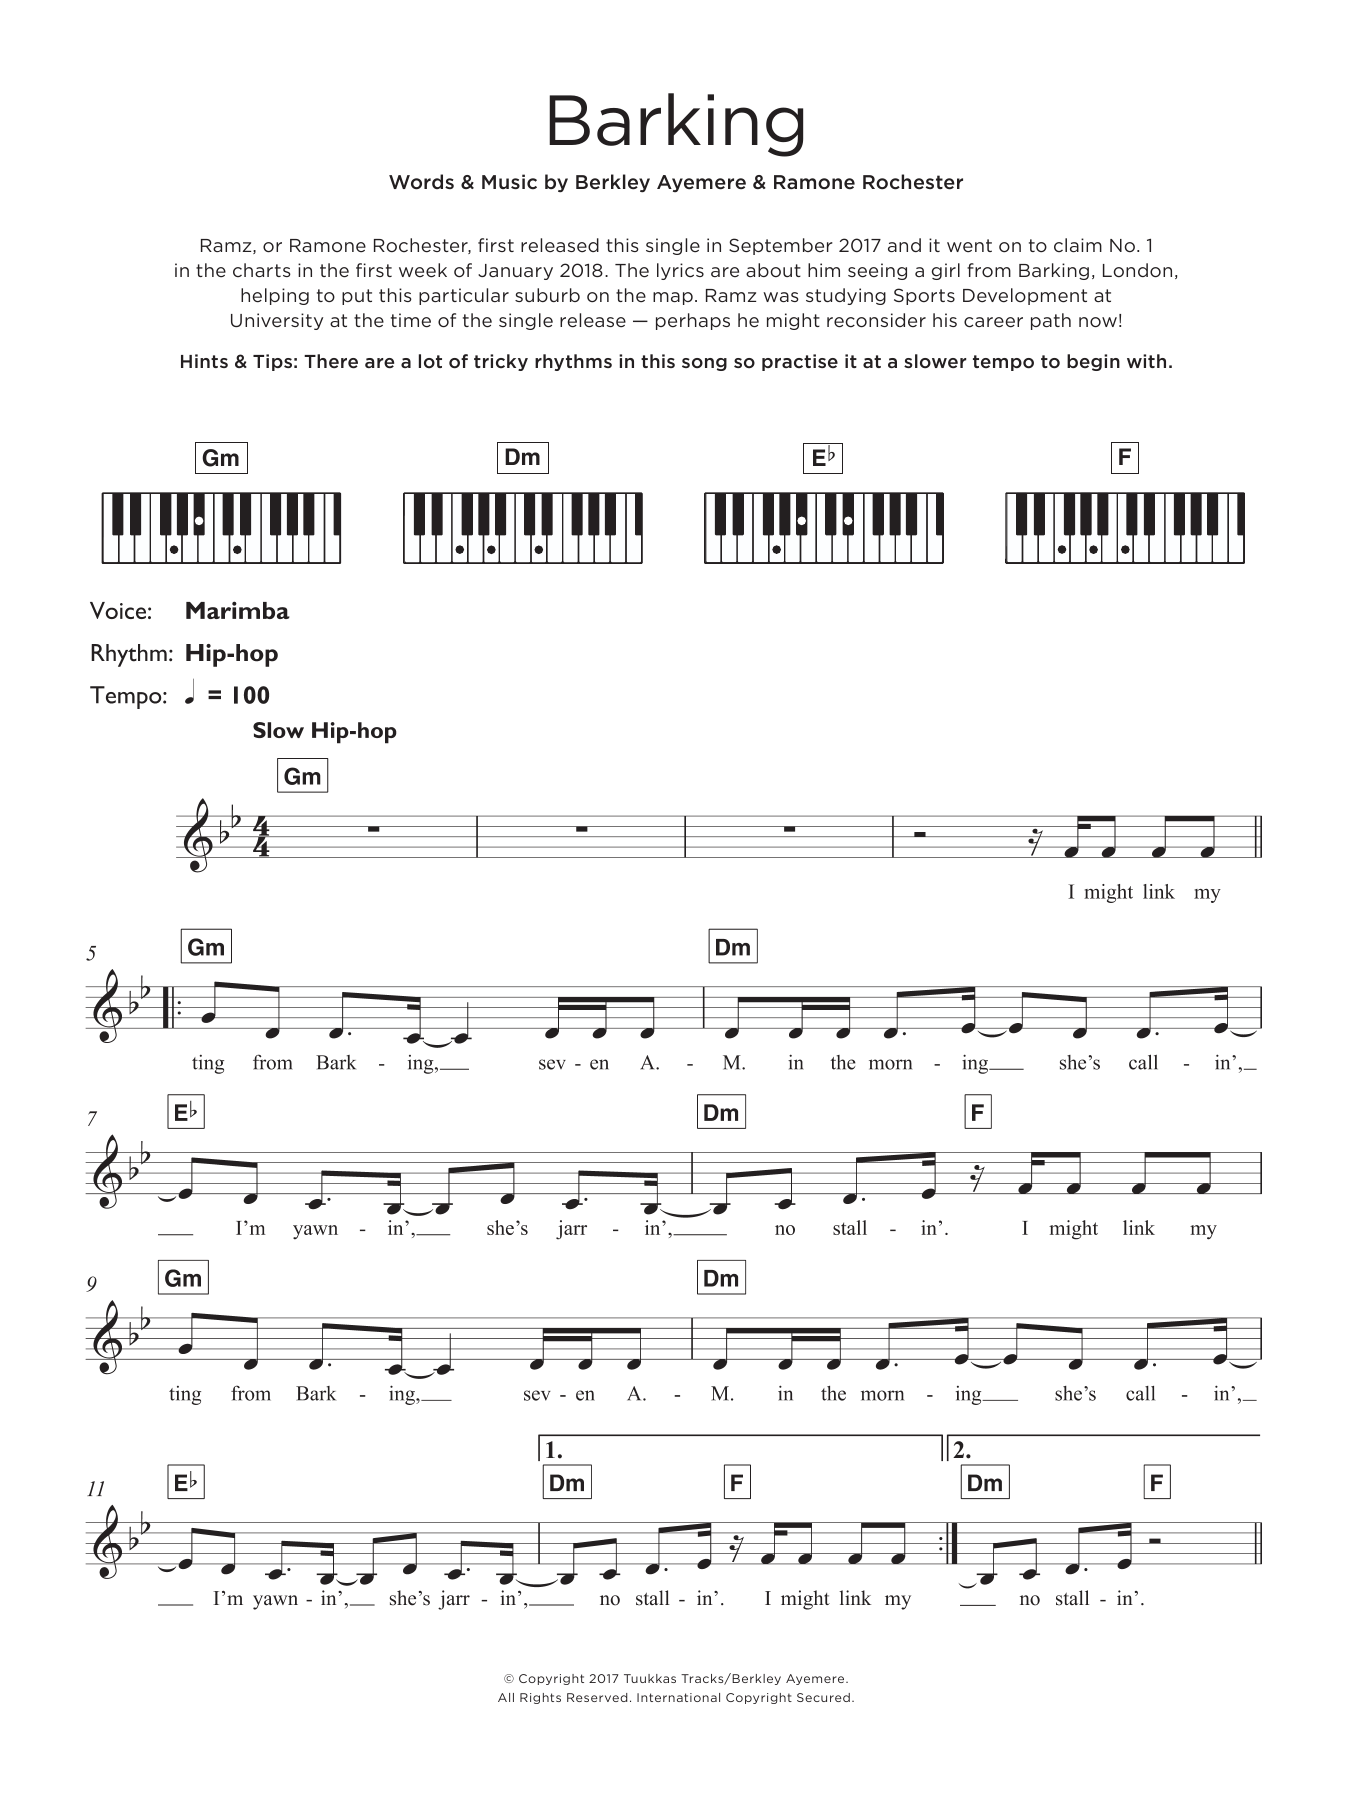 Ramz Barking Sheet Music Notes & Chords for Ukulele - Download or Print PDF